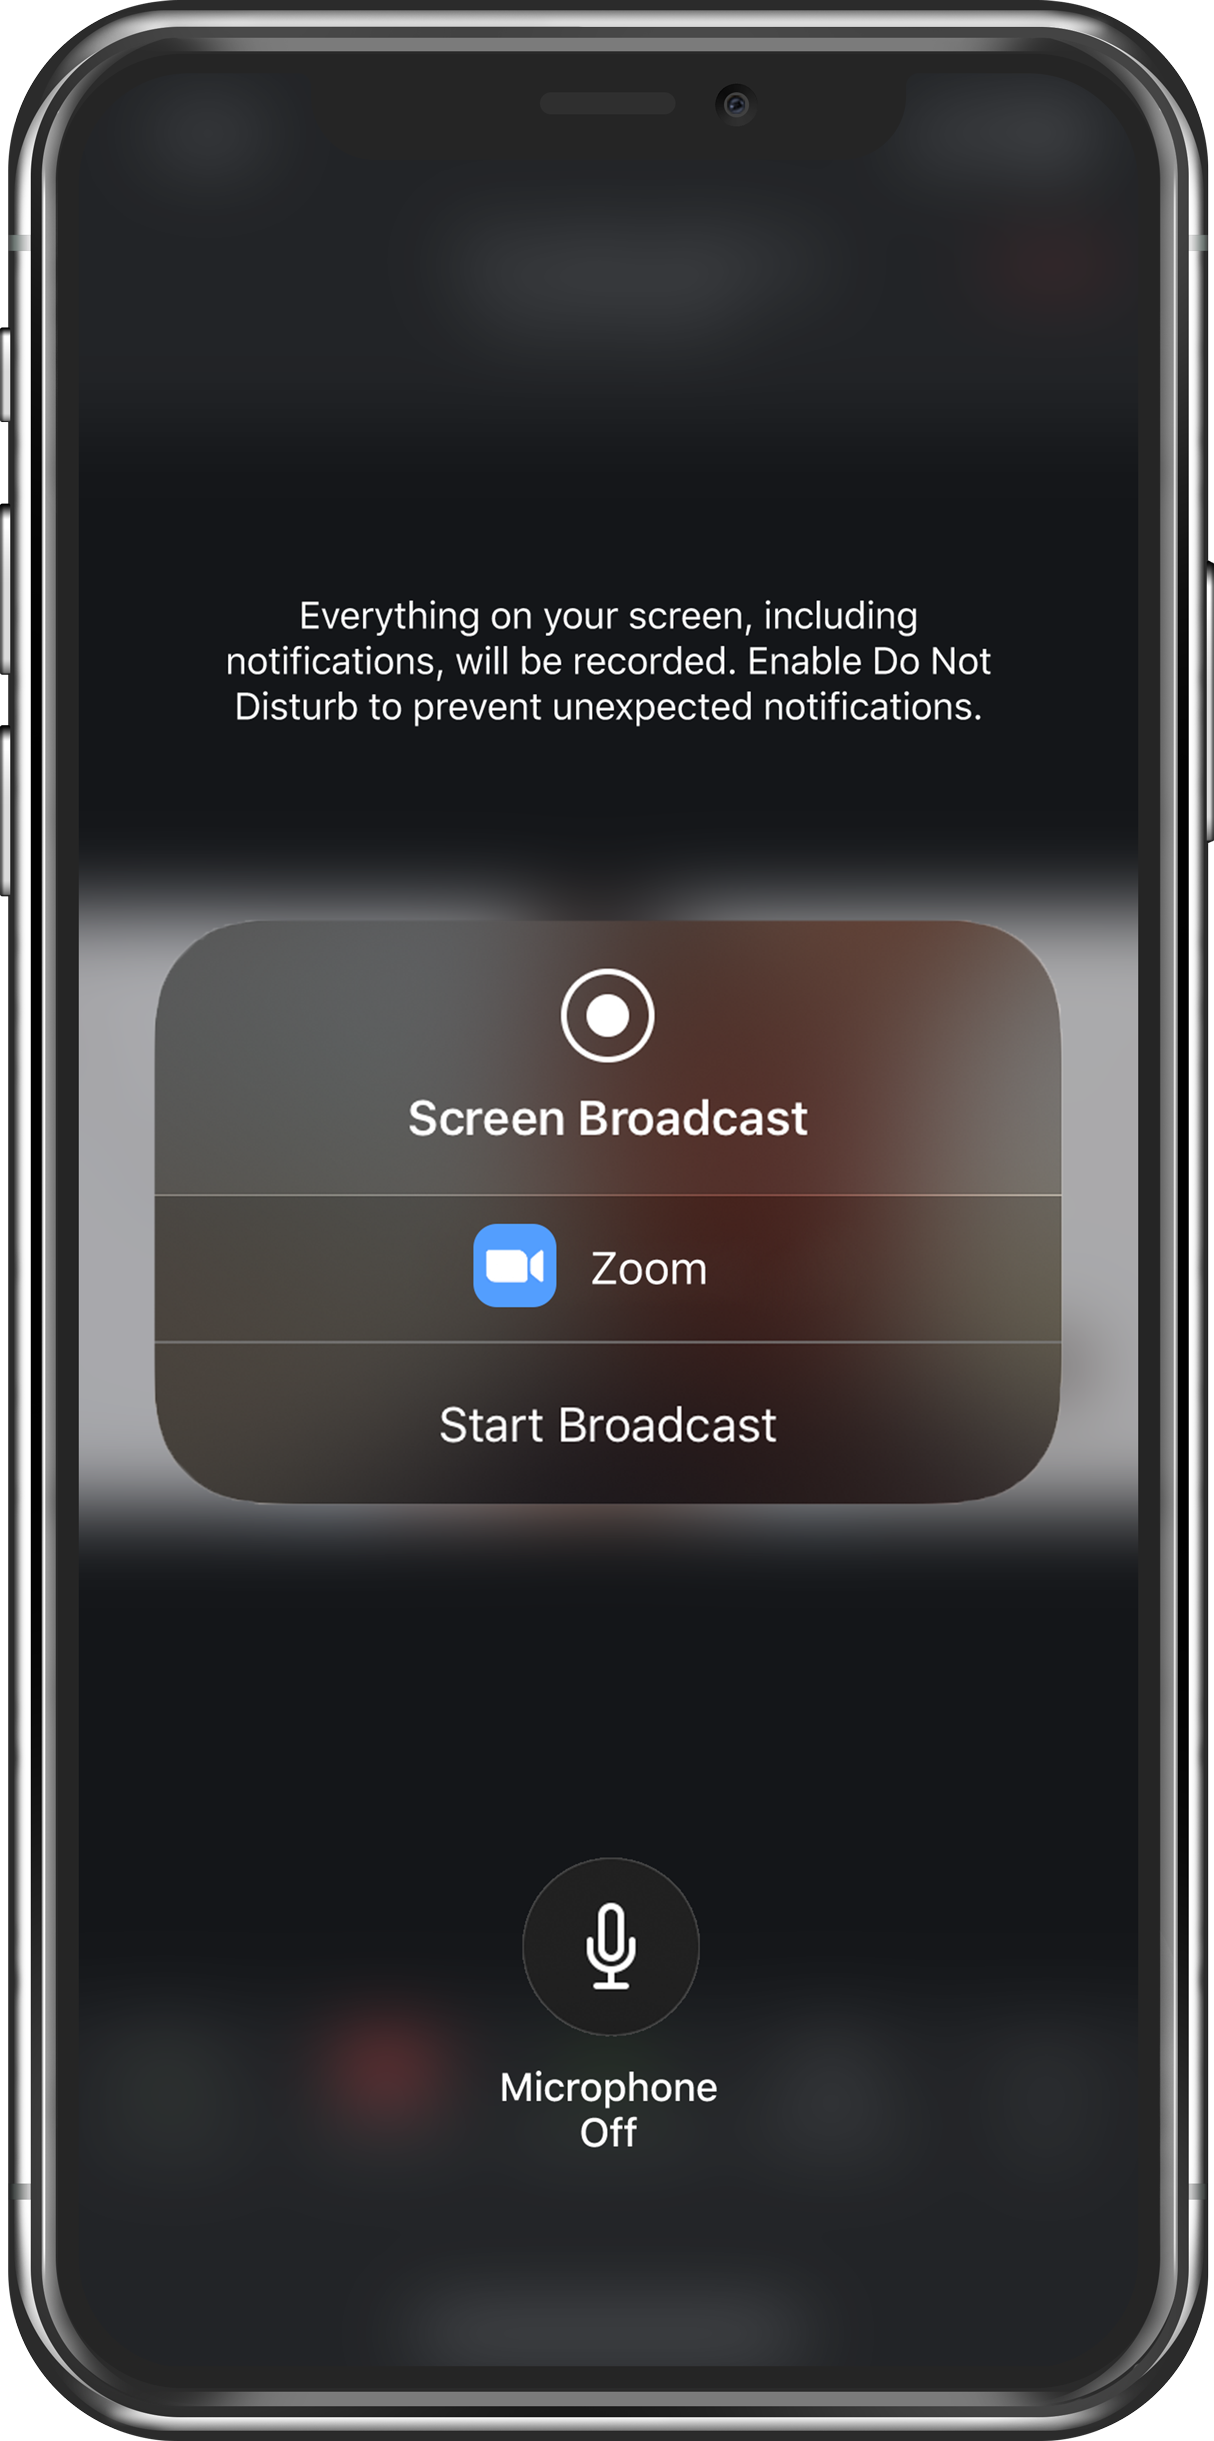 how to share screen on zoom using ipad